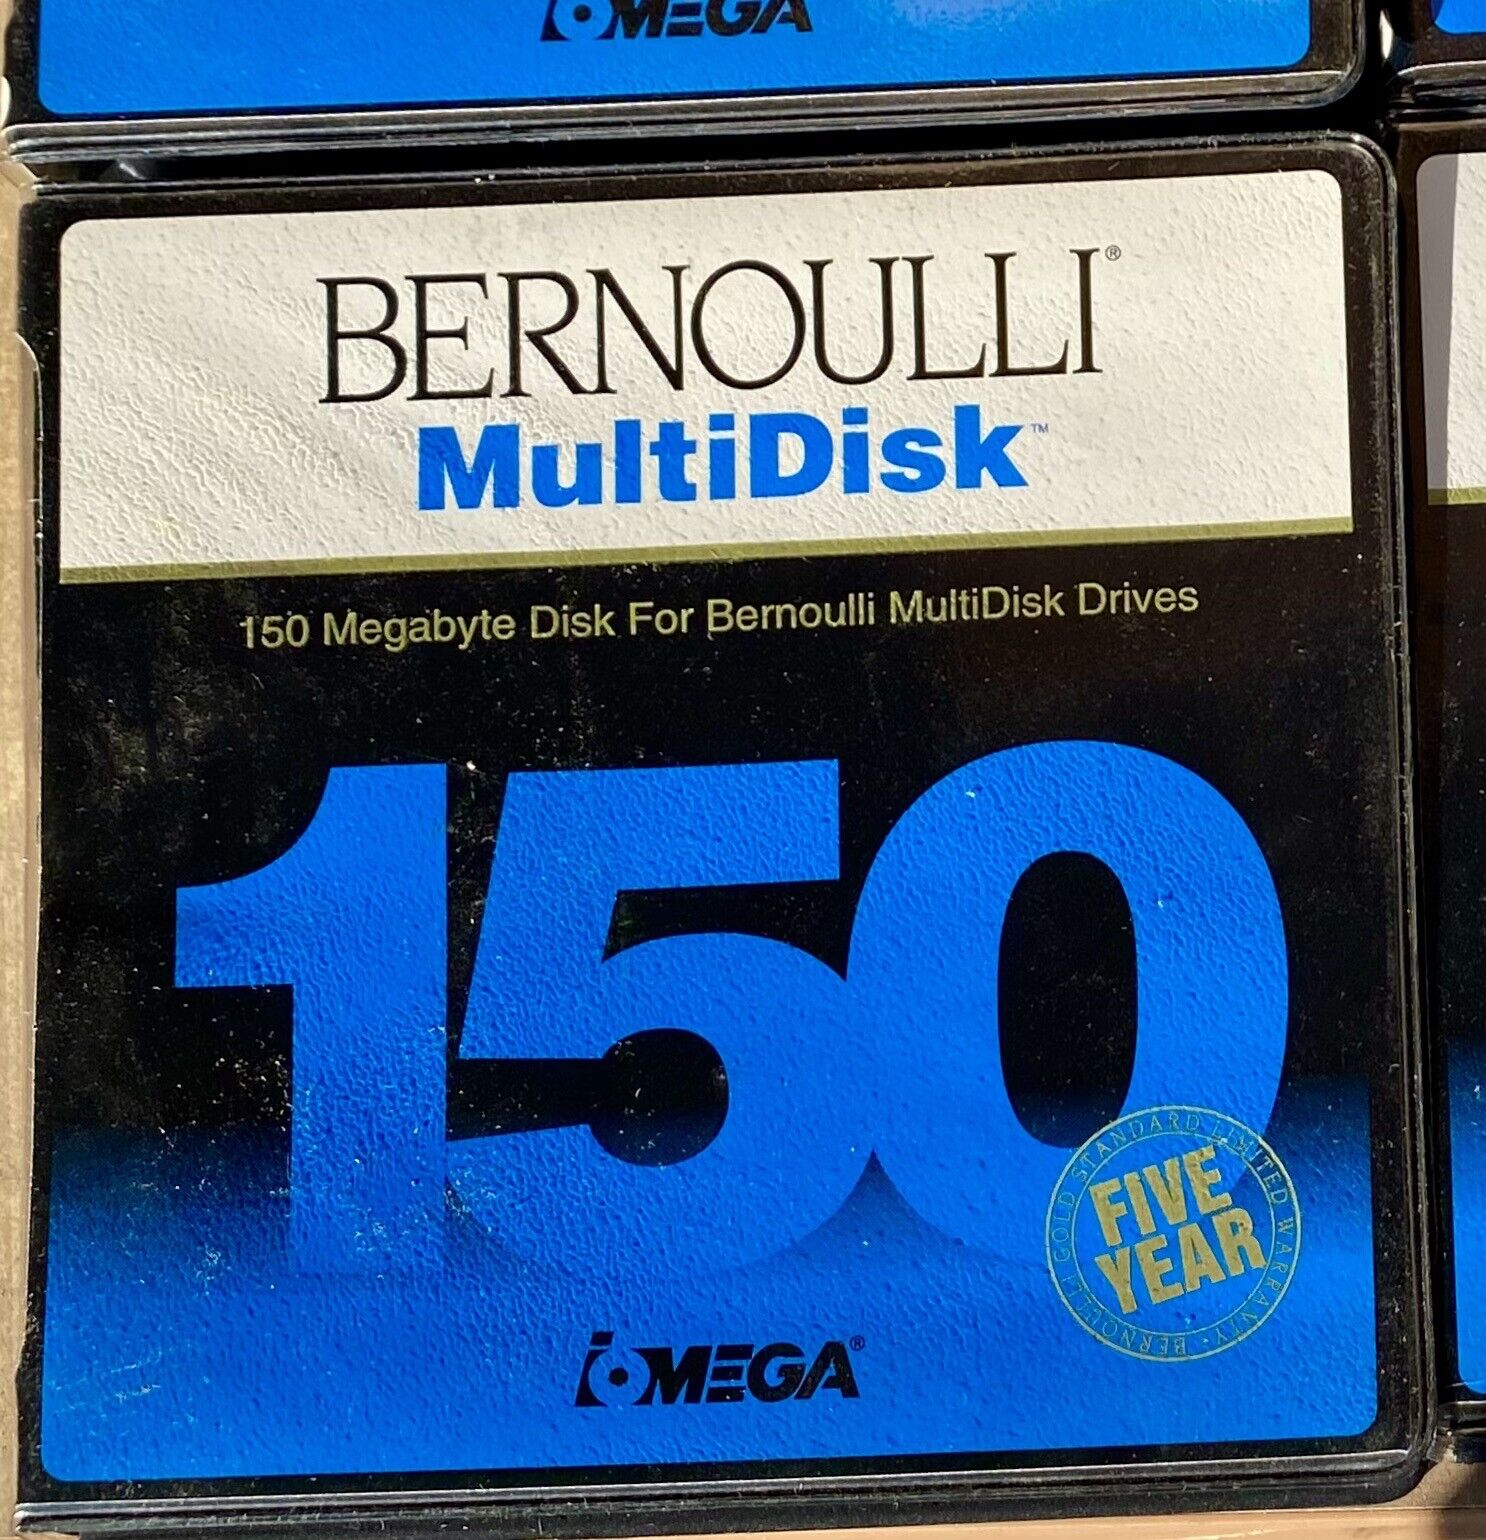 Lot Of 3 - BERNOULLI MultiDisk 150MB Megabyte Disk -  iOmega data storage